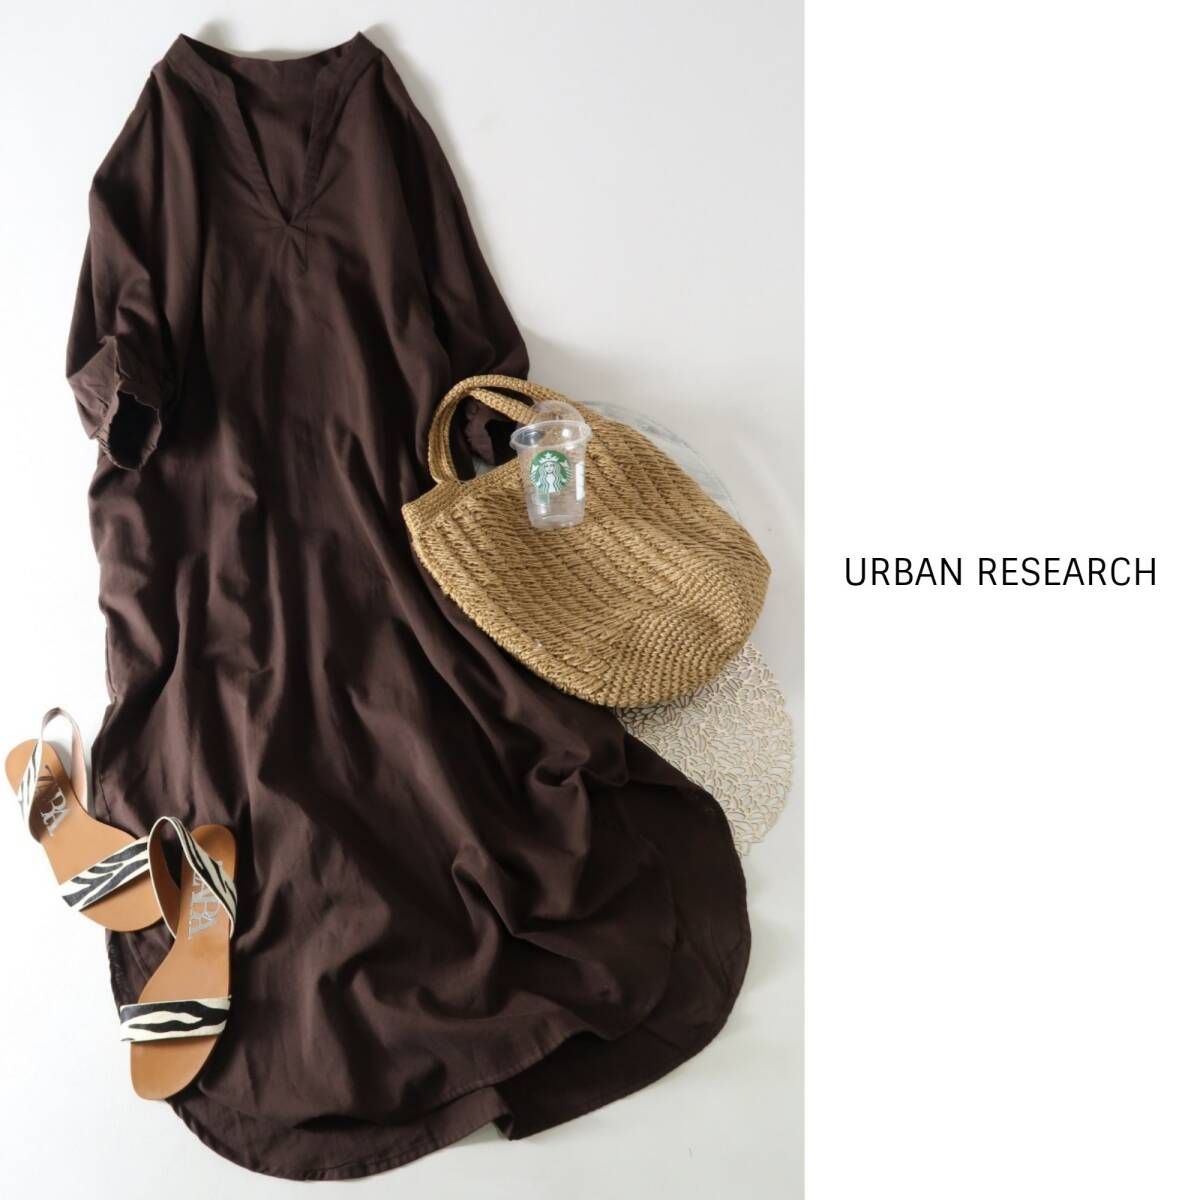 1 ten thousand * Urban Research URBAN RESEARCH*... cotton 100%bo dolphin f tongue One-piece free size *C-K1911